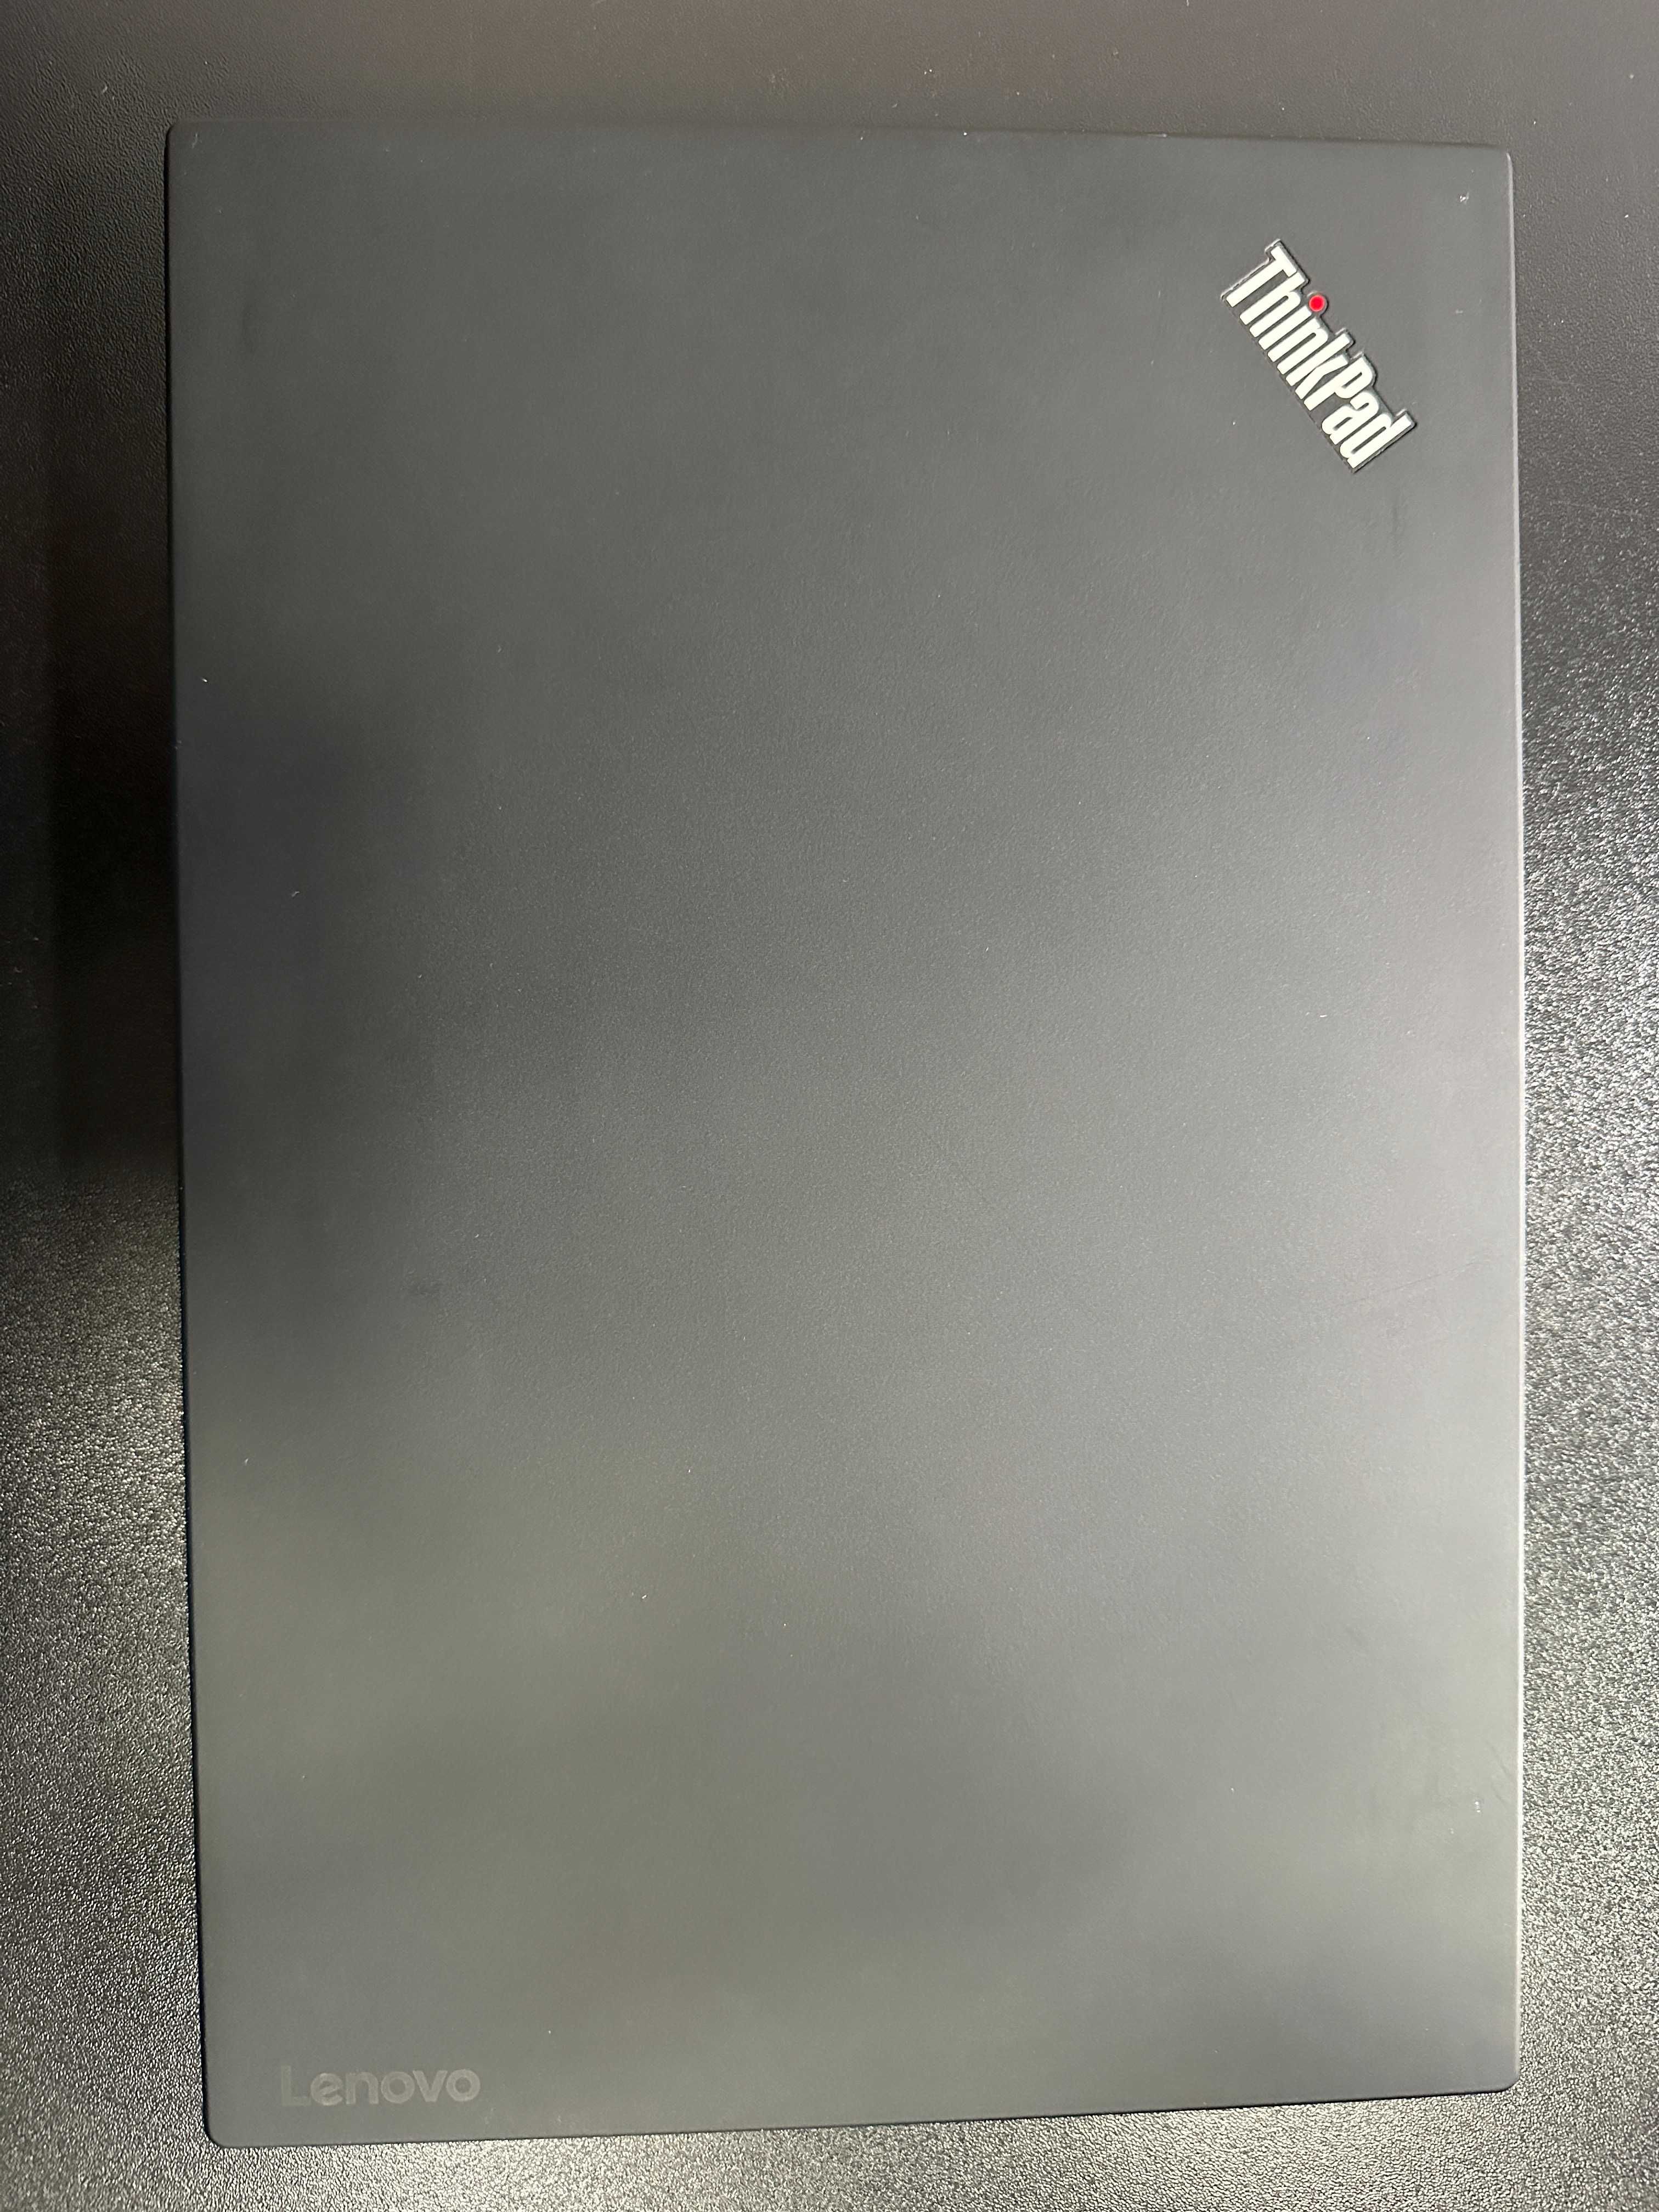 Laptop Lenovo X1 Carbon i7 / 16gb / 500gb Gwarancja Lombard4u DWO